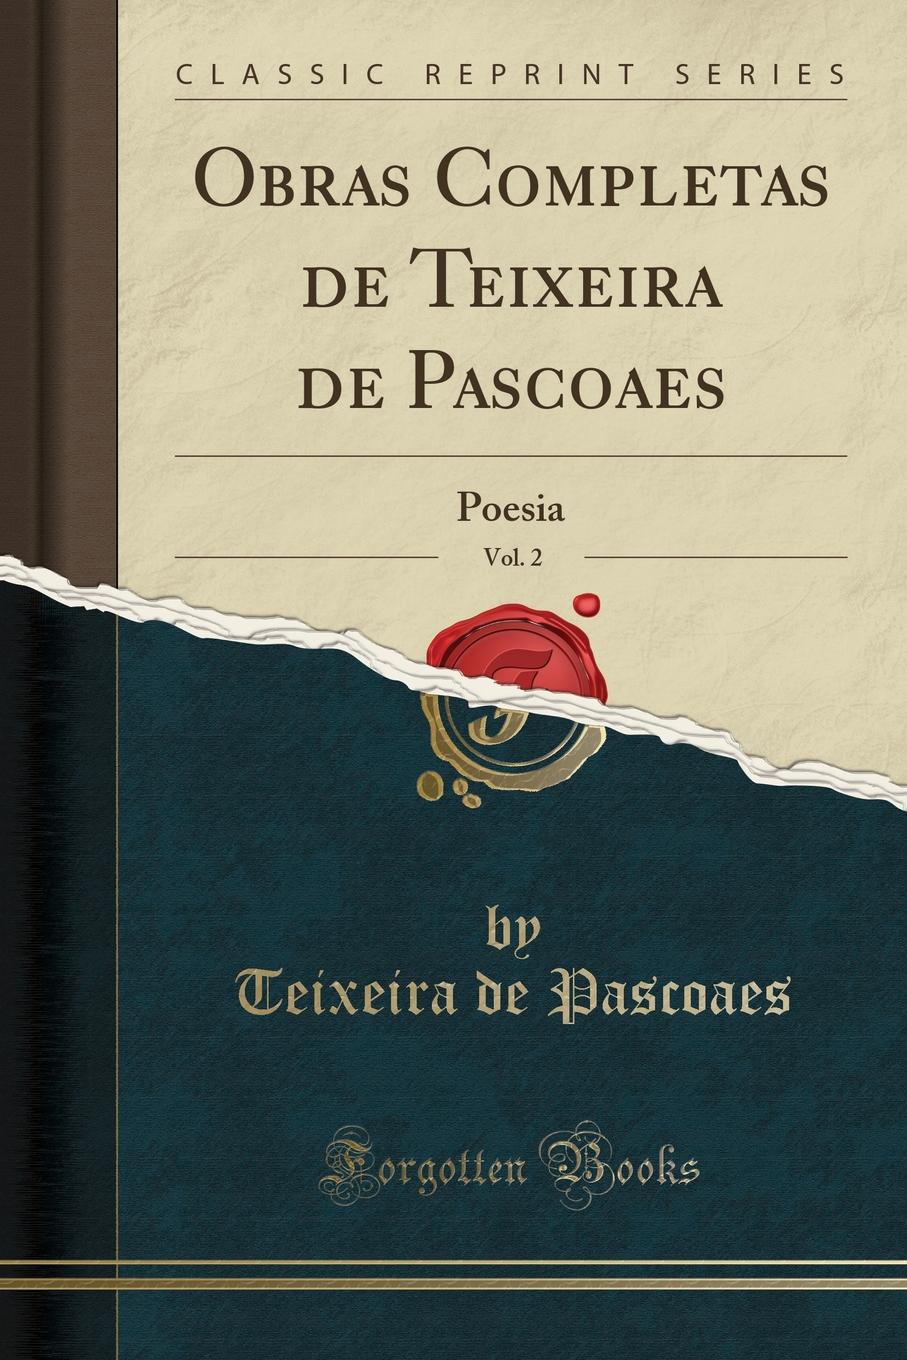 Teixeira de Pascoaes Obras Completas de Teixeira de Pascoaes, Vol. 2. Poesia (Classic Reprint)